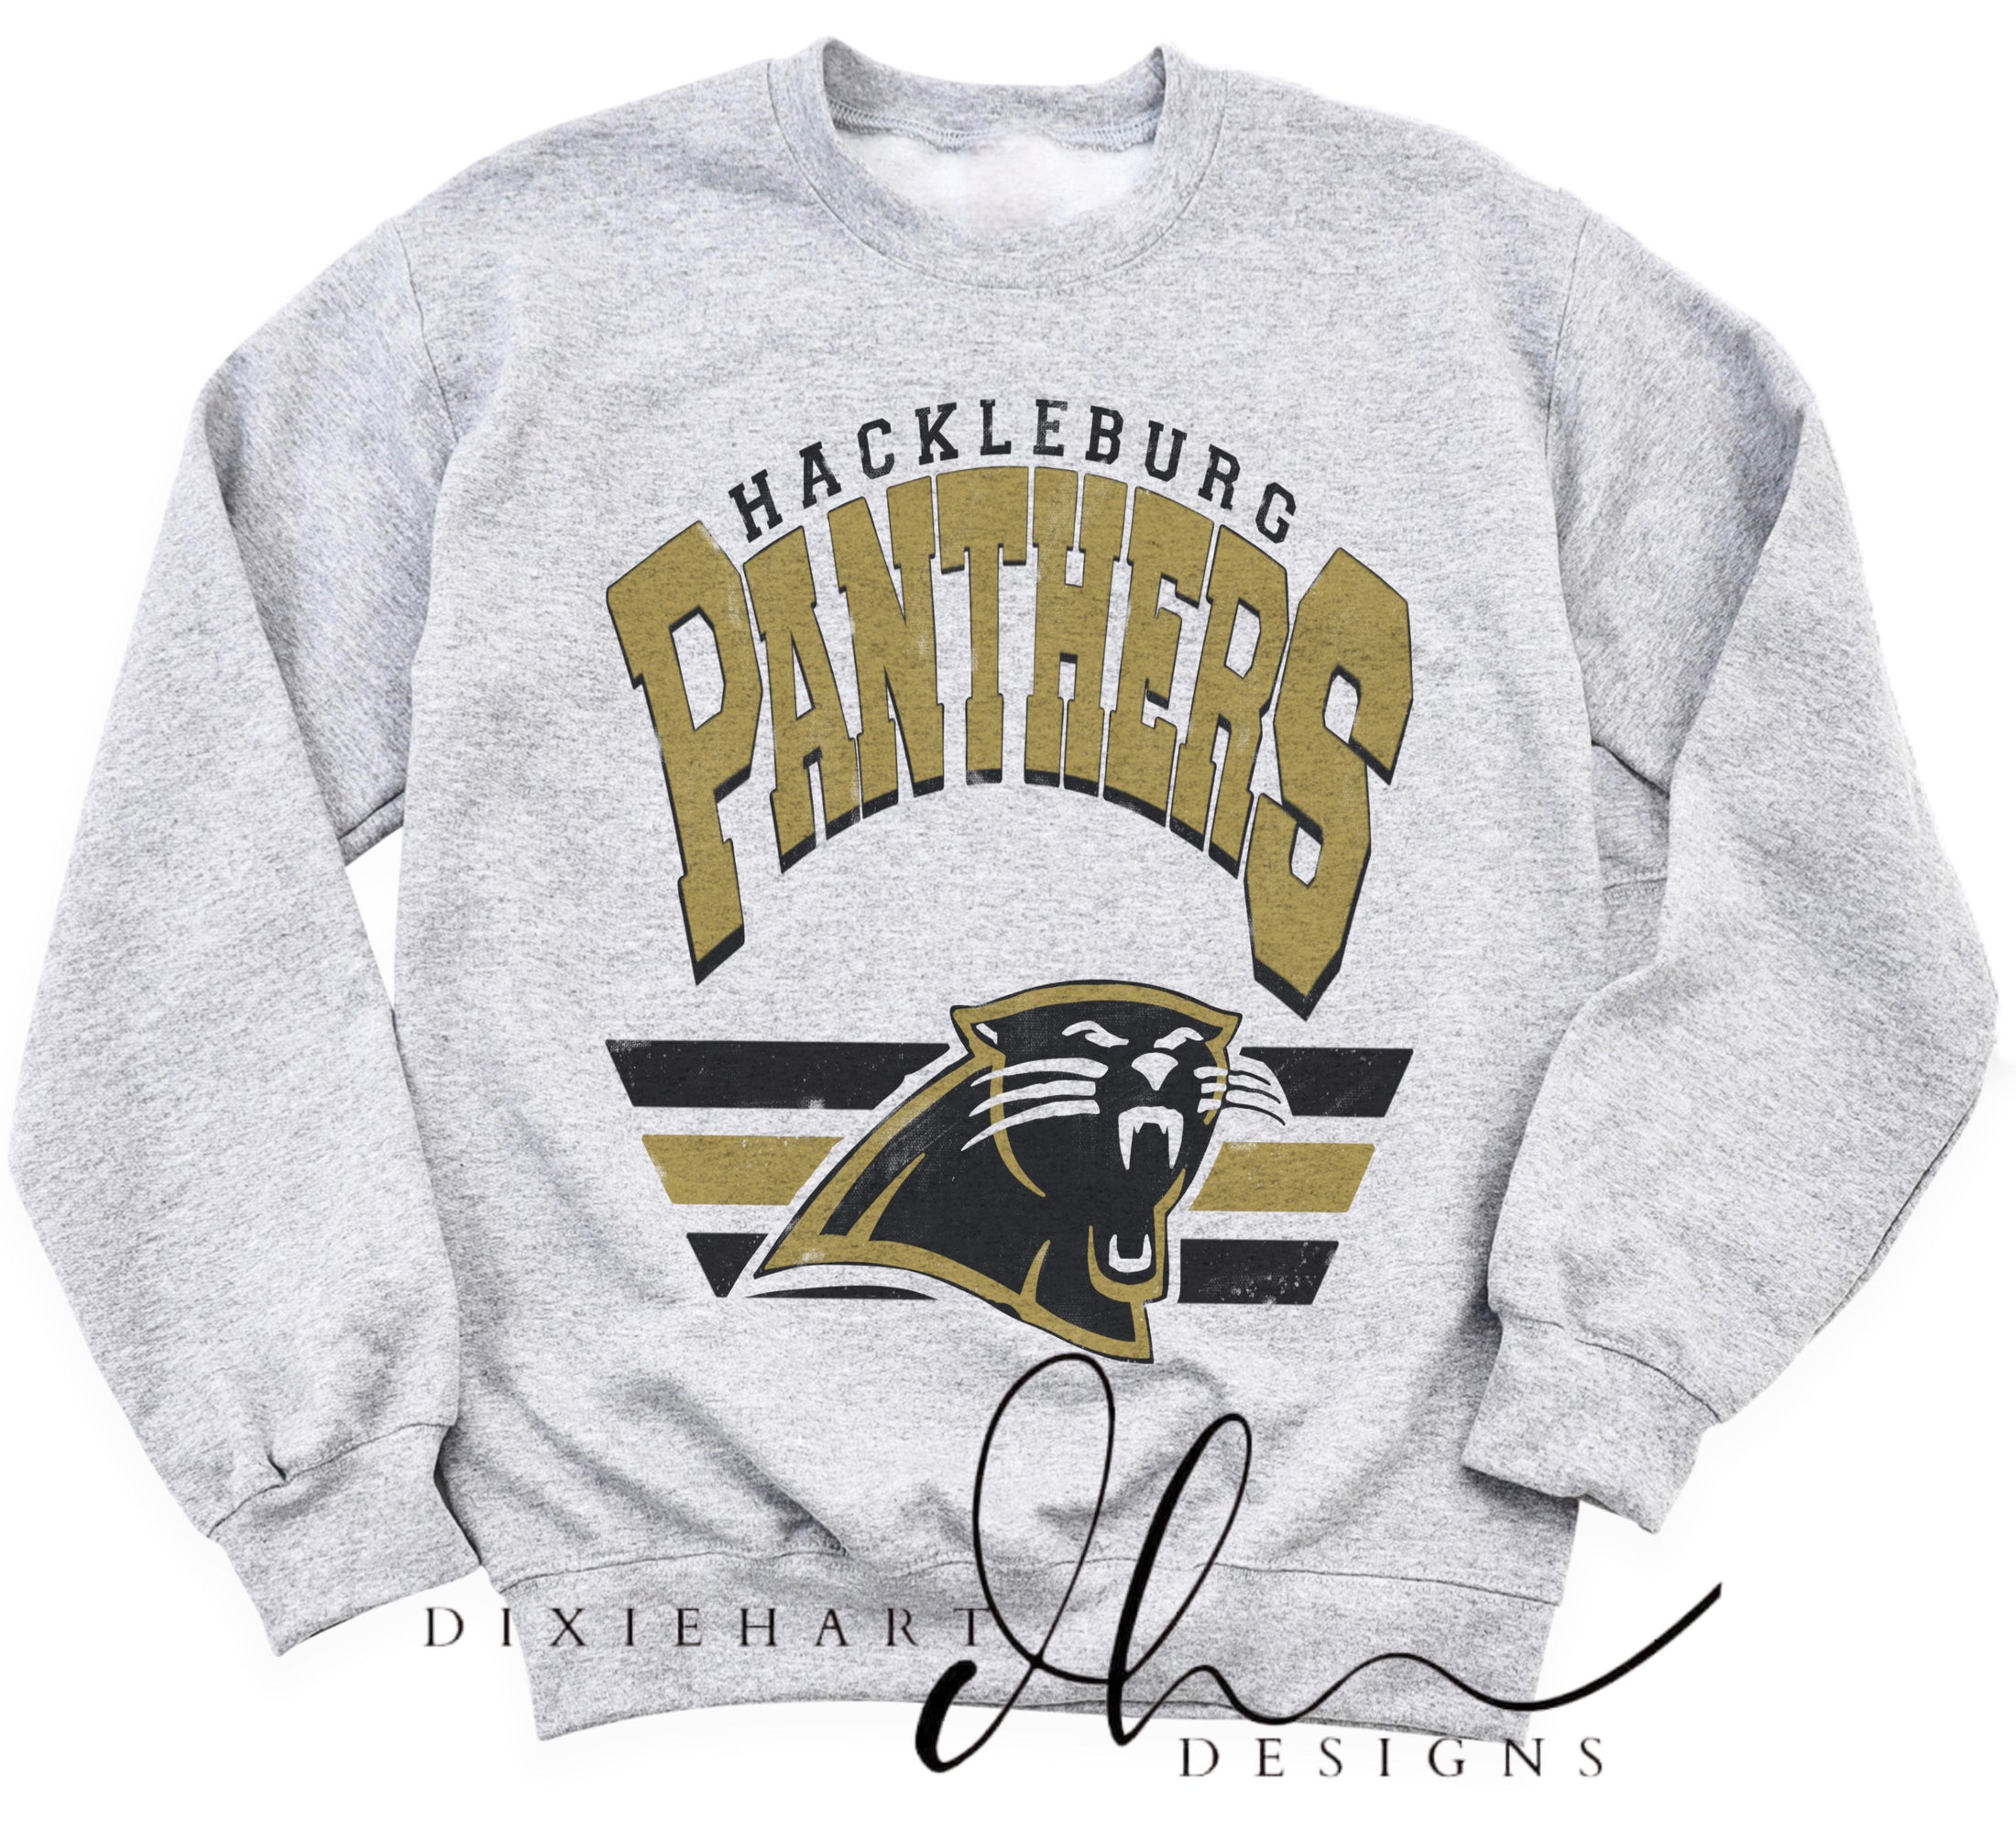 Hackleburg Panthers Sweatshirt